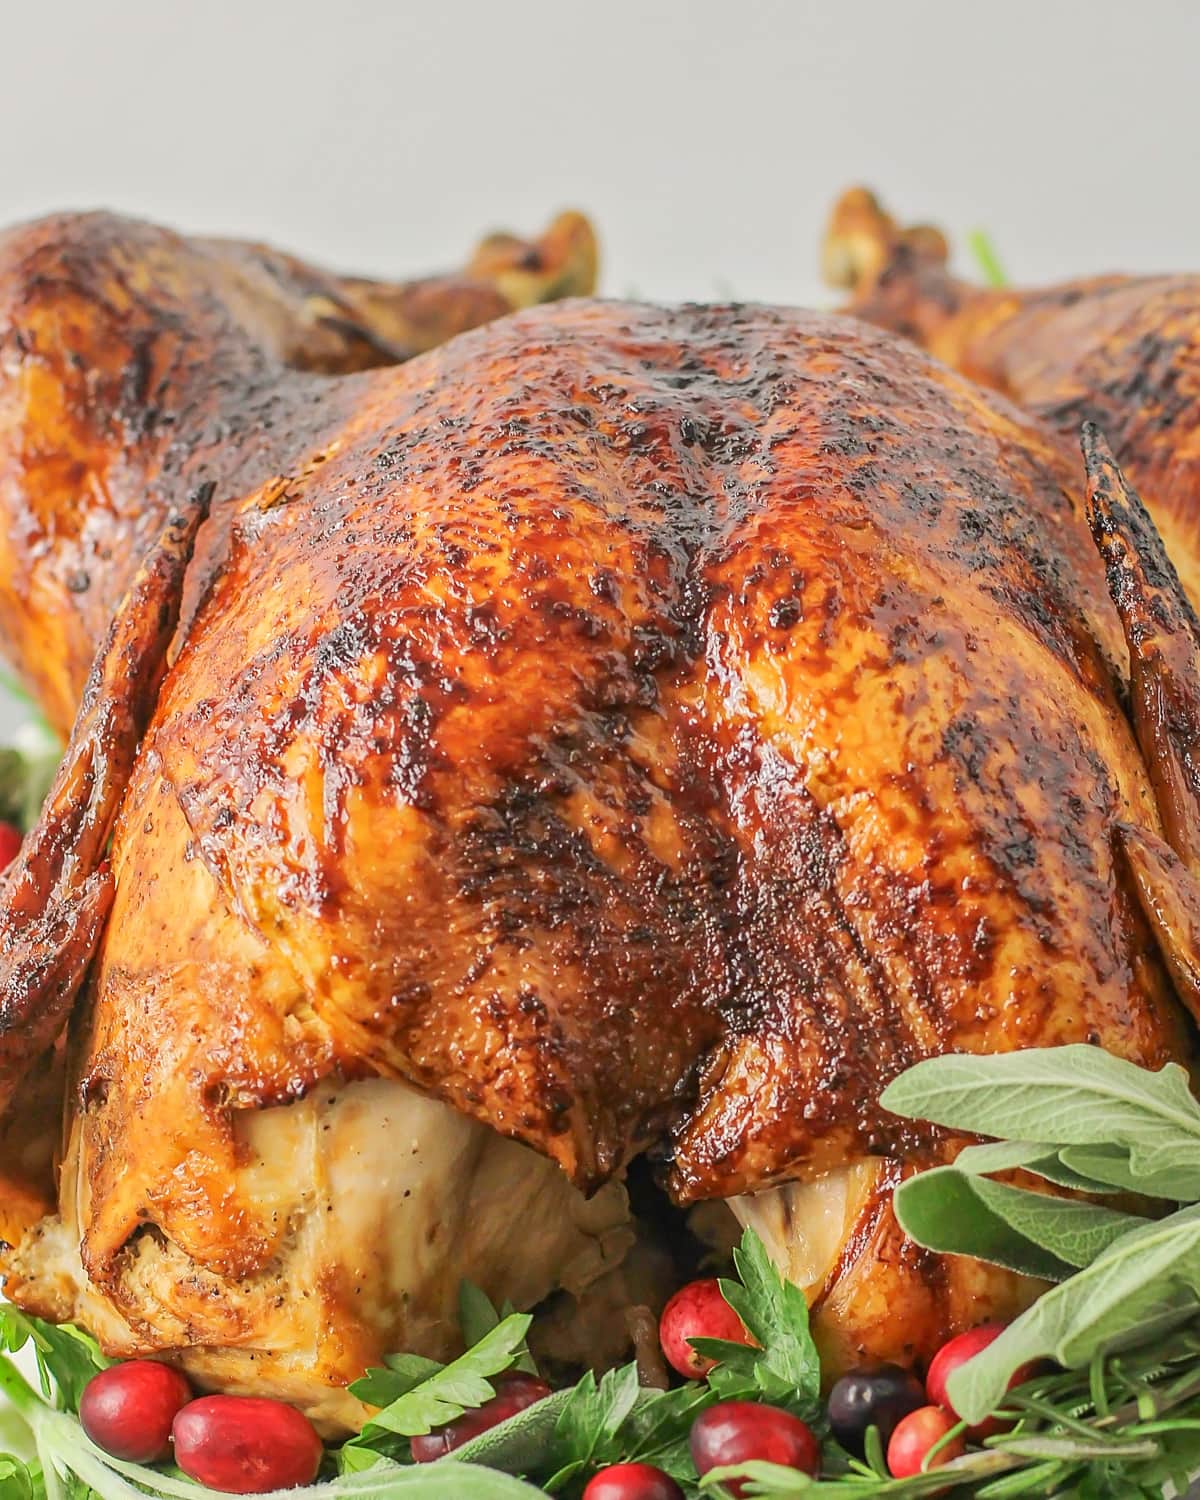 How to roast a turkey close up image.